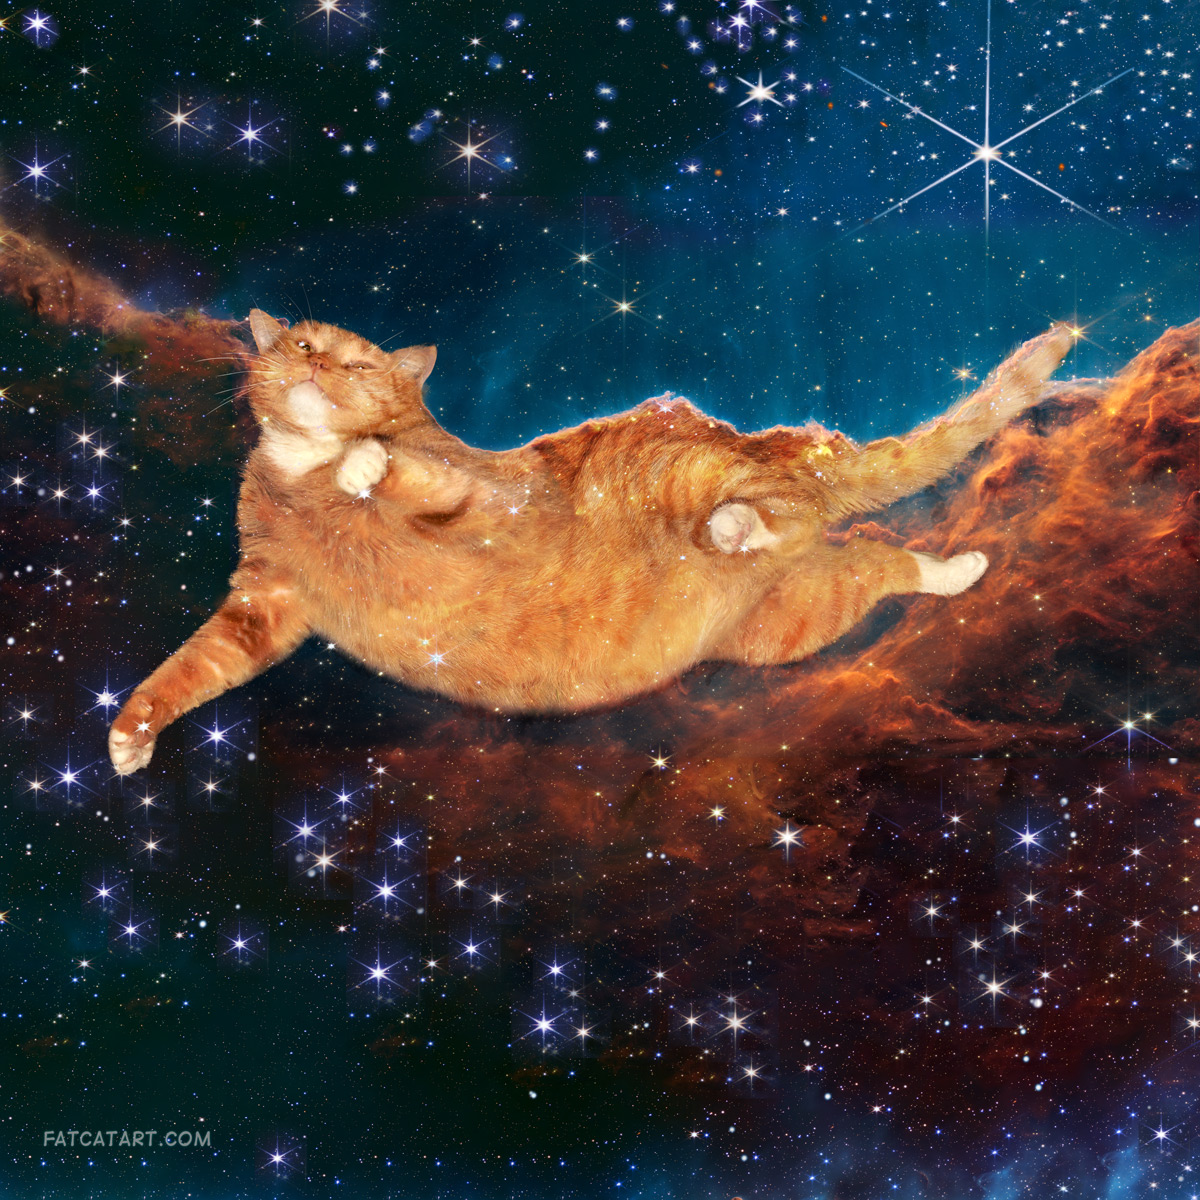 Zarathustra the Celestial Cat rolling on the Cosmic Cliffs in Carina Nebula